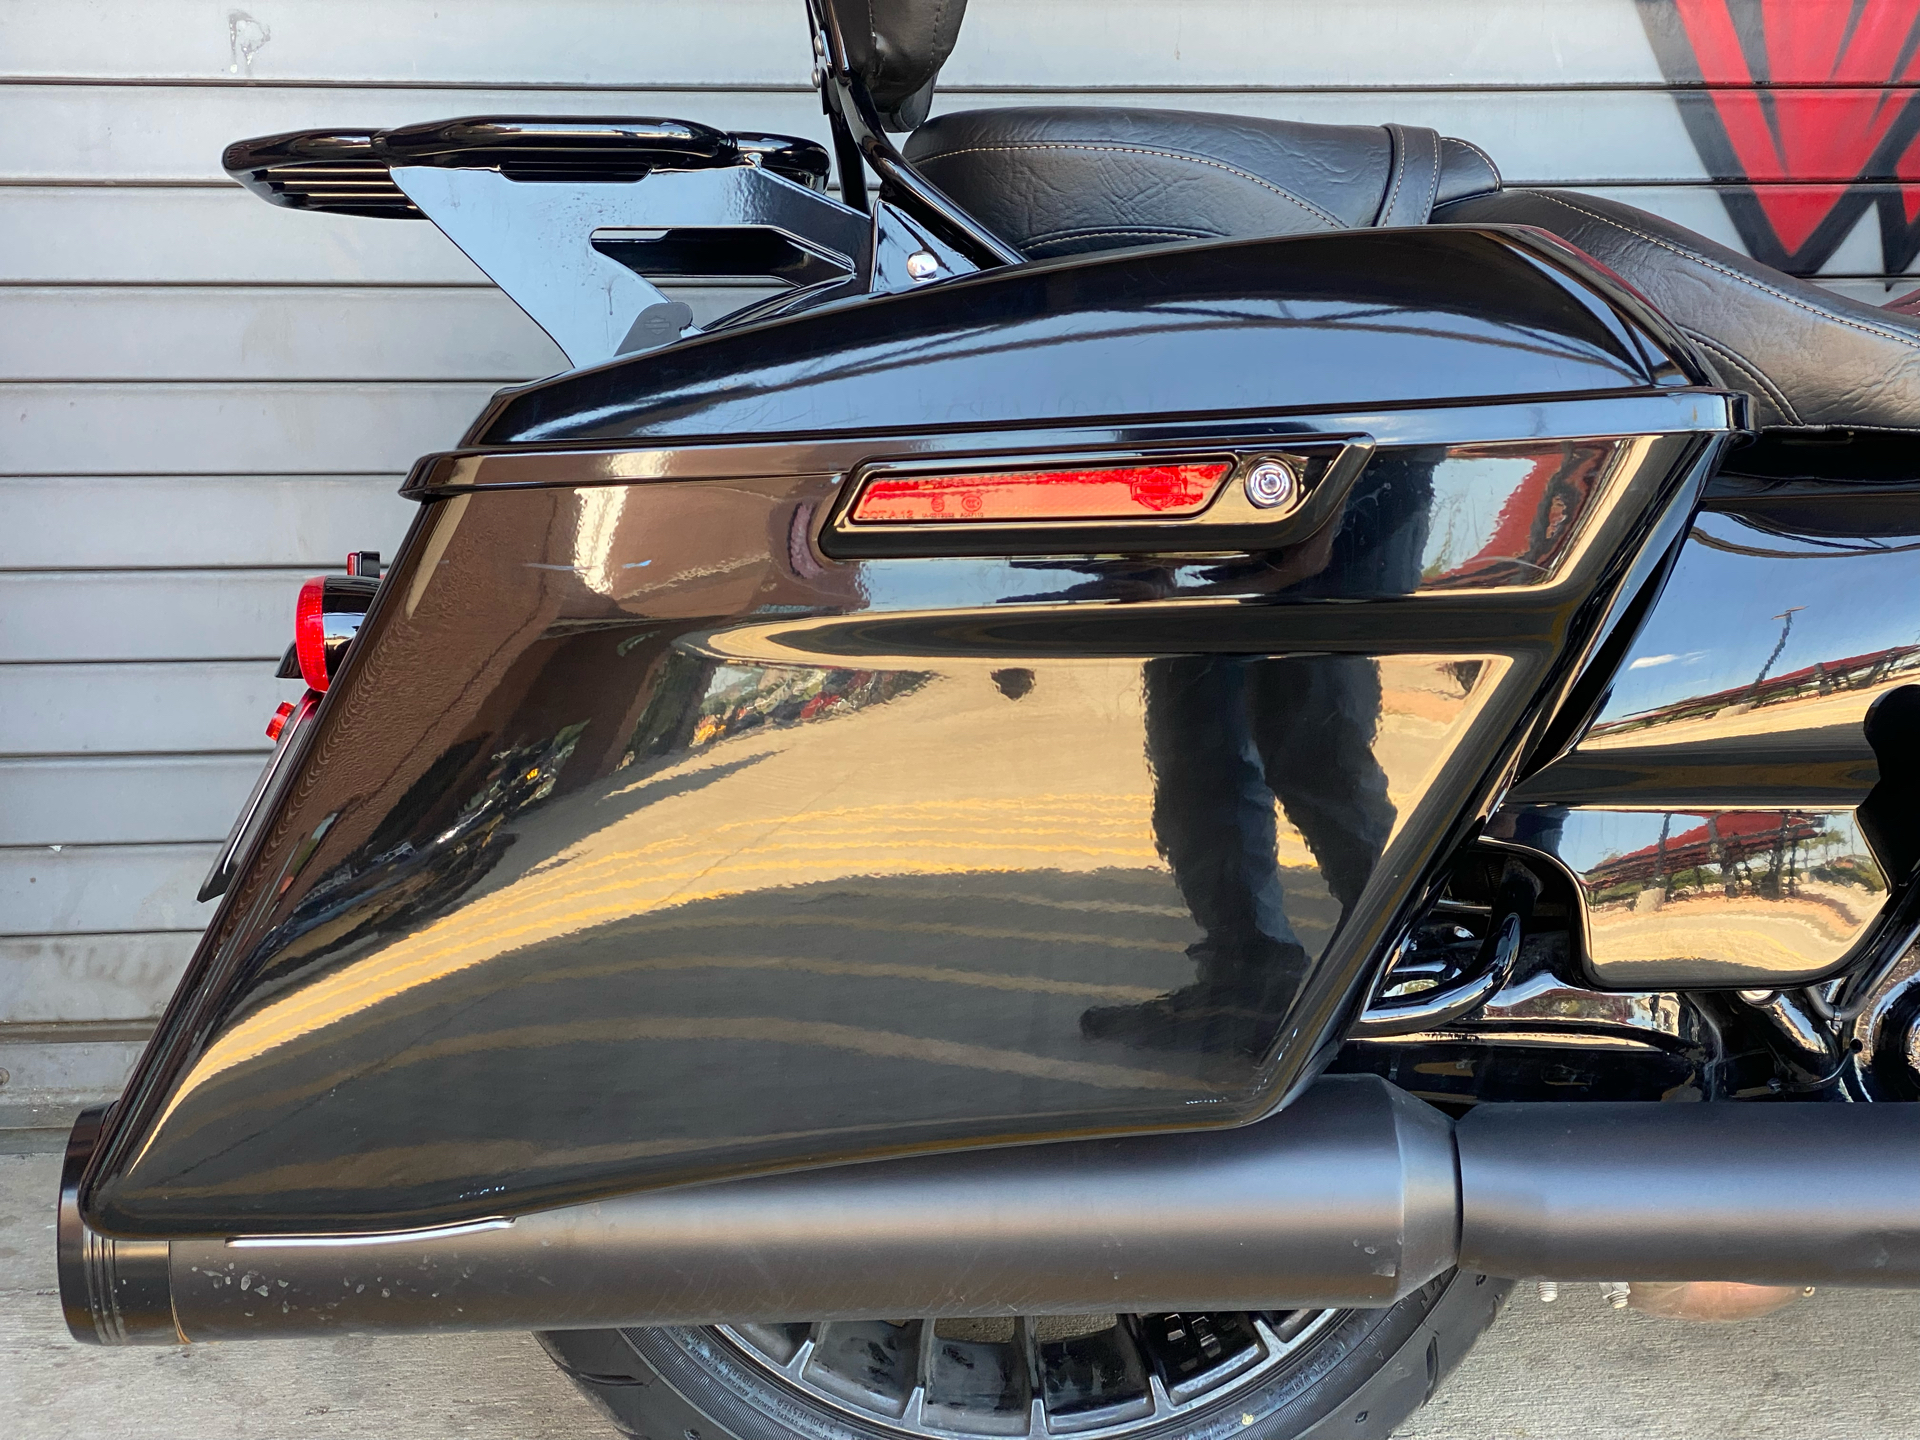 2019 Harley-Davidson Road King® Special in Carrollton, Texas - Photo 8